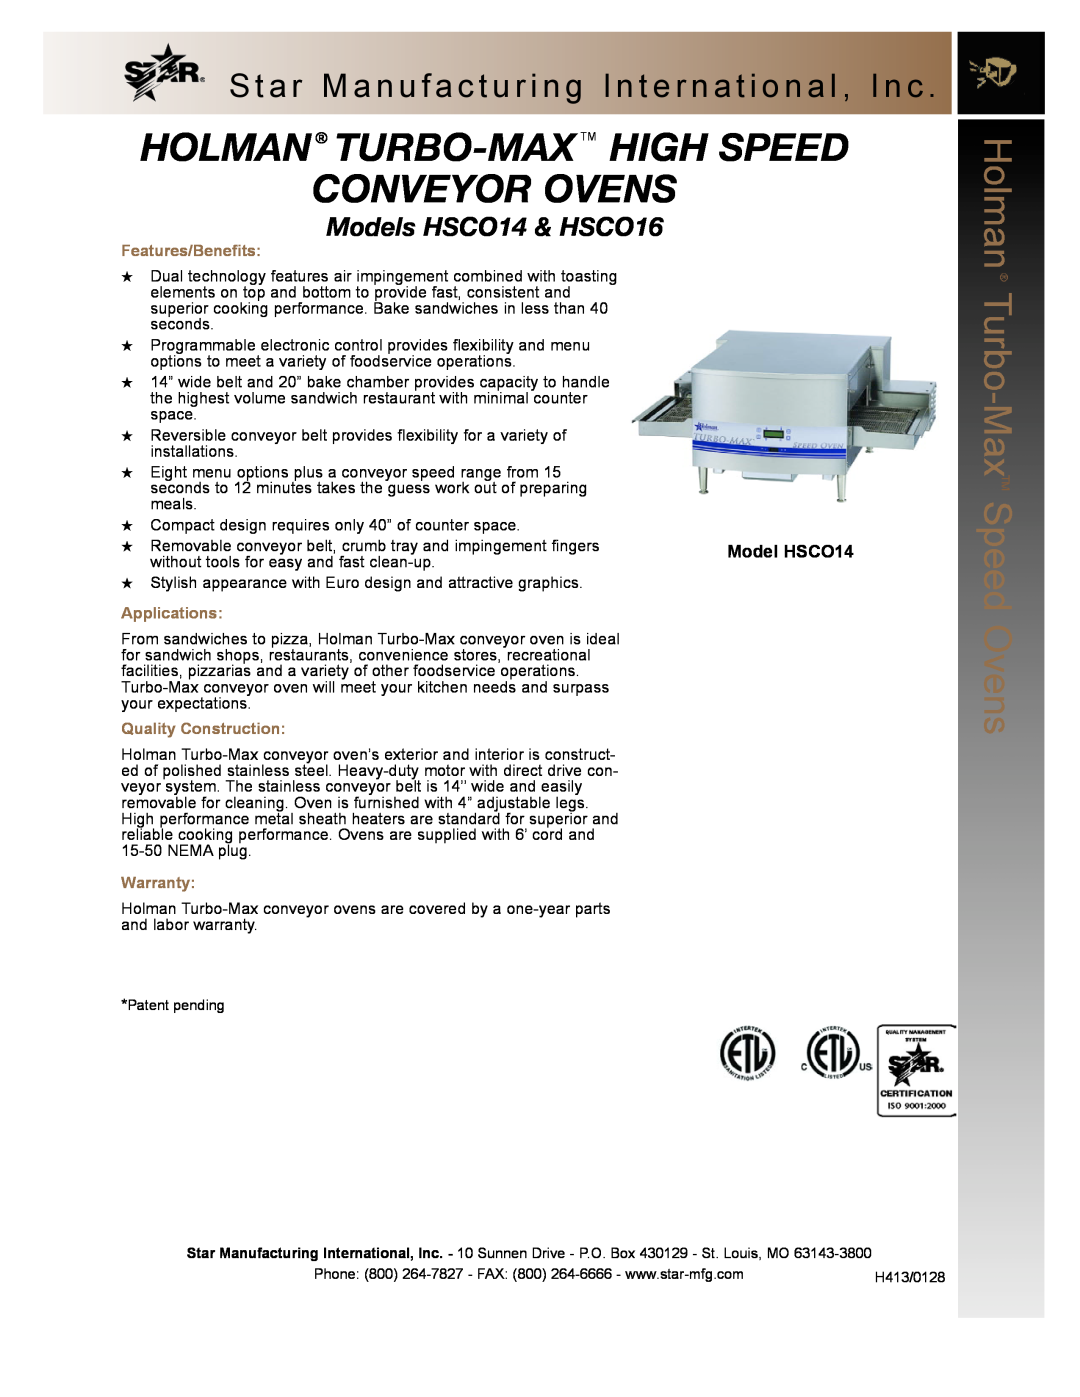 Star Manufacturing warranty Holman Turbo-Max Tm High Speed Conveyor Ovens, Models HSCO14 & HSCO16, Model HSCO14 